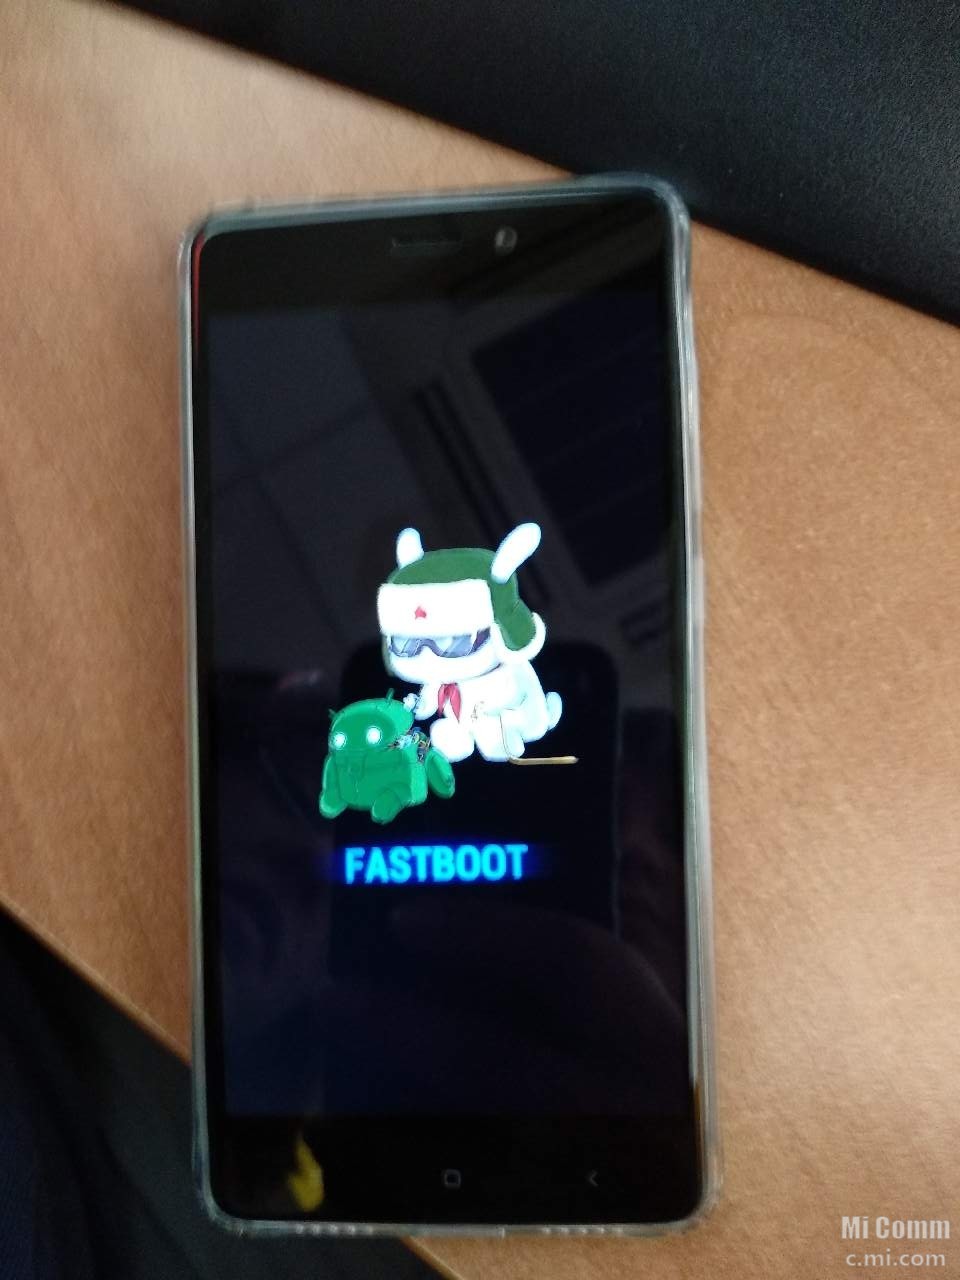 Redmi note 8 fastboot. Xiaomi Redmi Note 8 Pro Fastboot. Xiaomi Redmi Note 7 Fastboot. Fastboot Xiaomi Redmi 4x. Fastboot Xiaomi 8t.